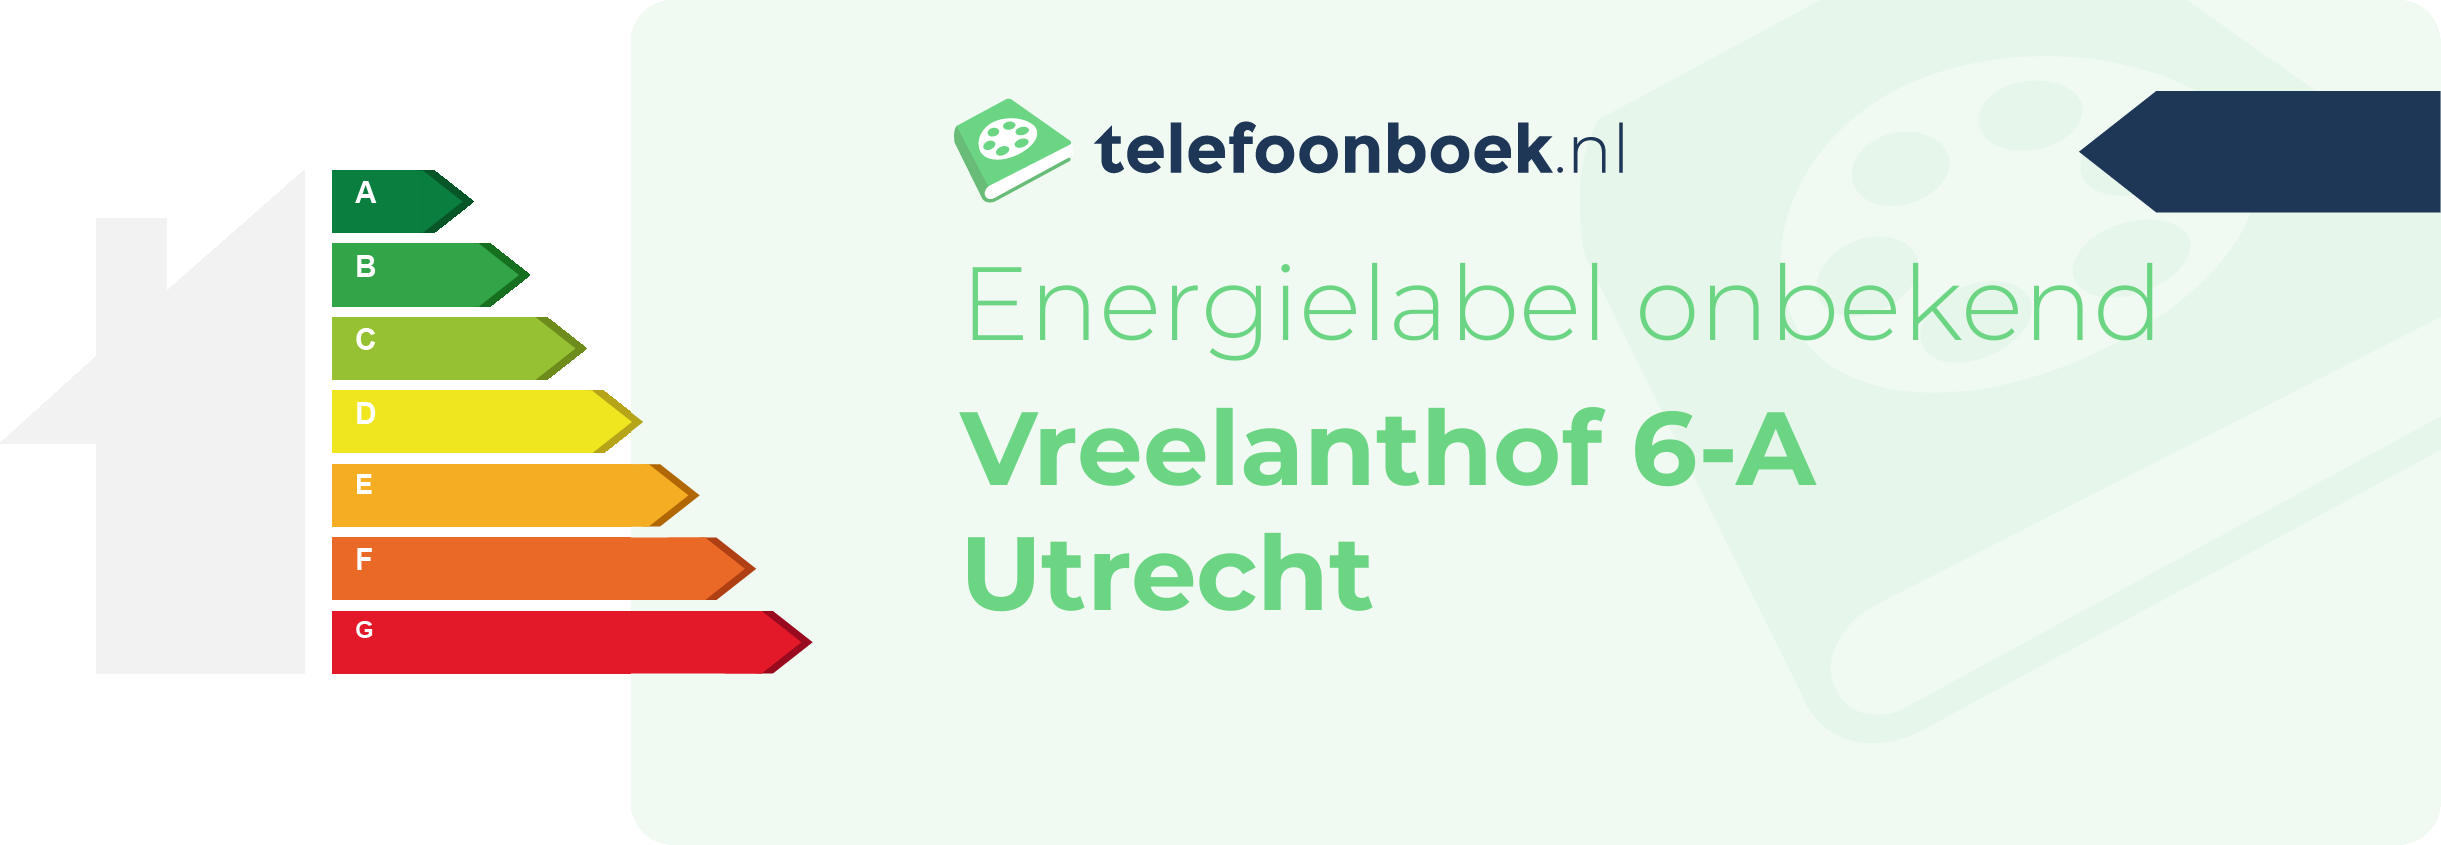 Energielabel Vreelanthof 6-A Utrecht